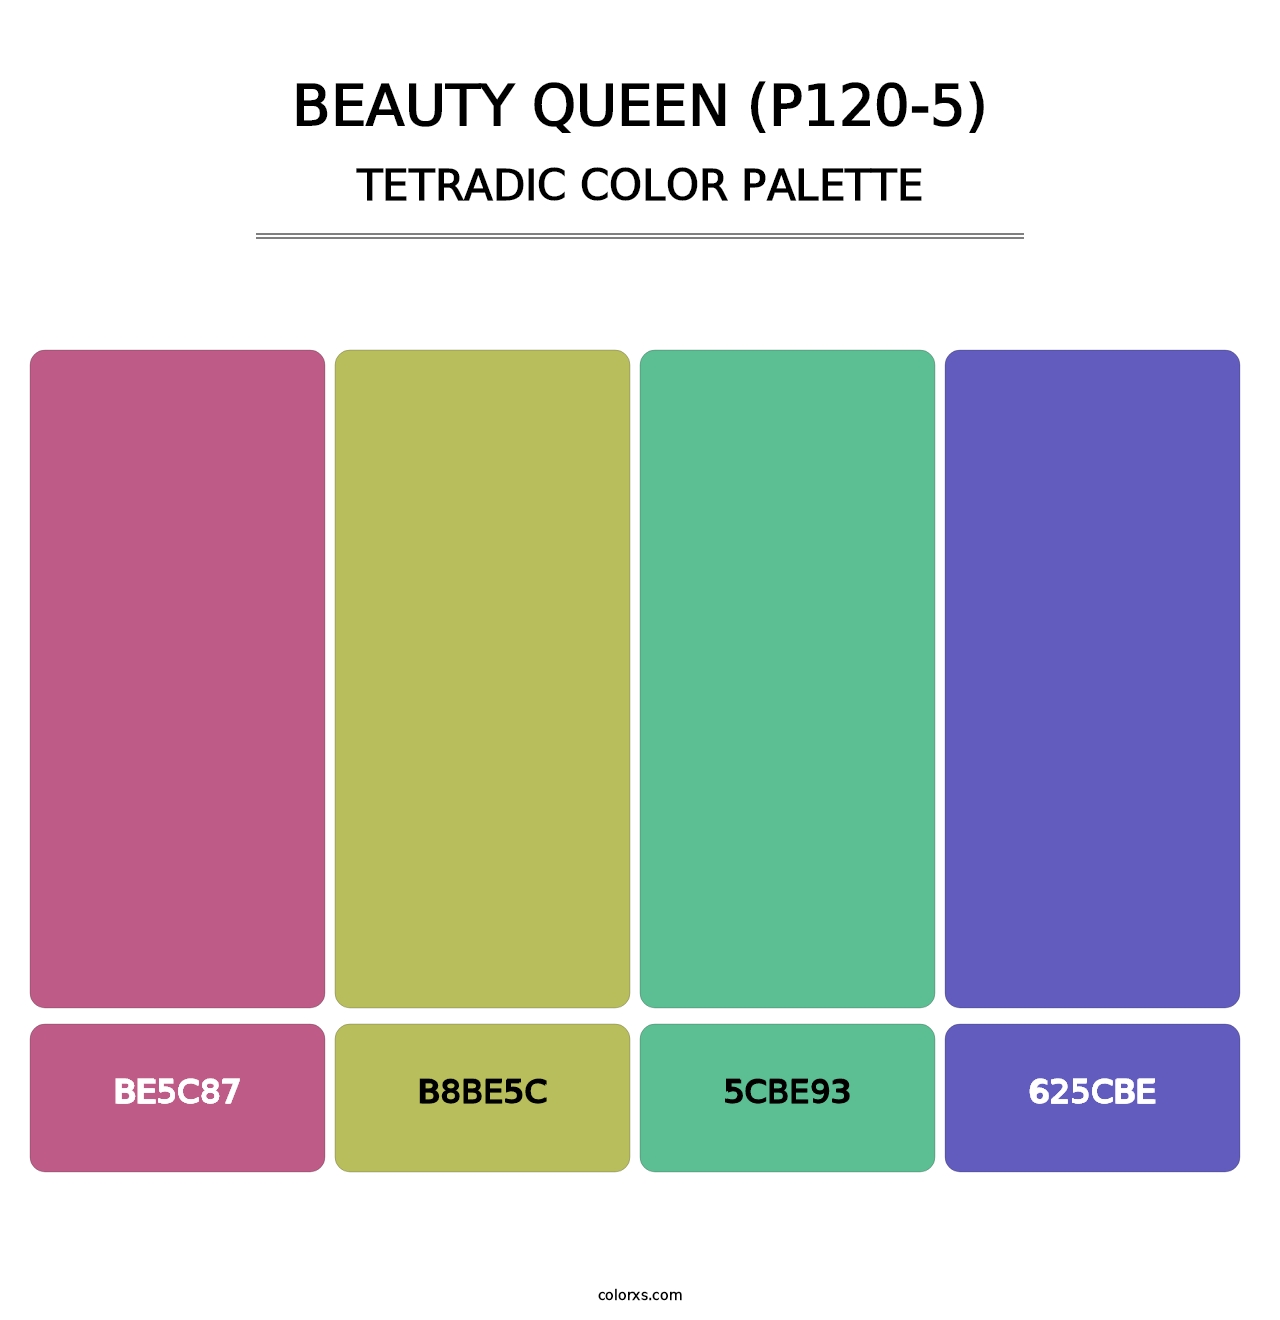 Beauty Queen (P120-5) - Tetradic Color Palette